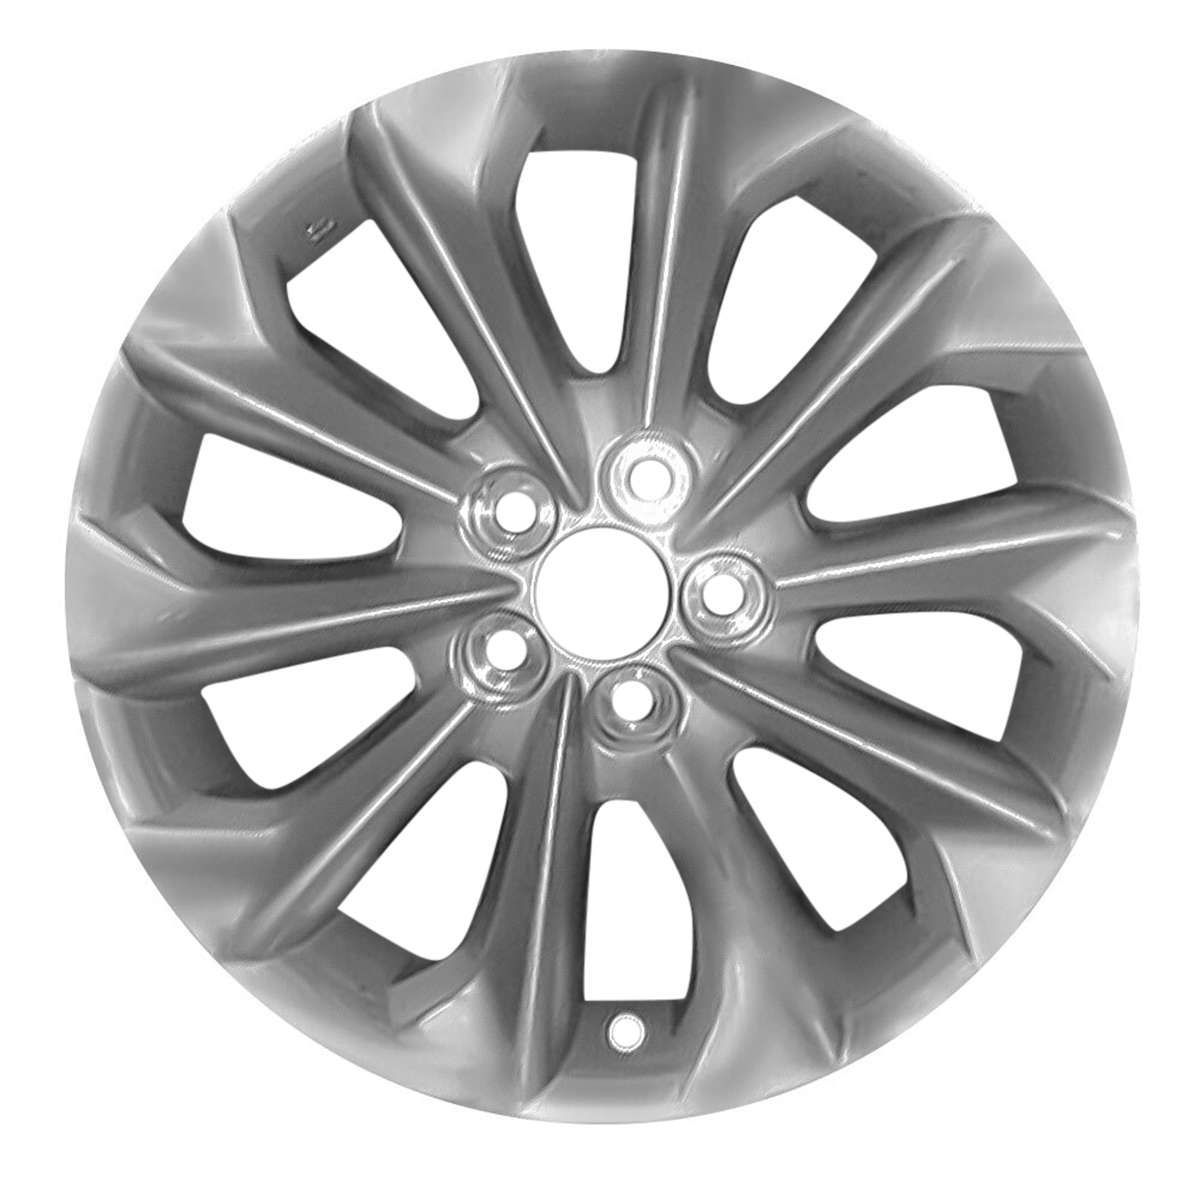 2022 Toyota Corolla New 16" Replacement Wheel Rim RW75252S